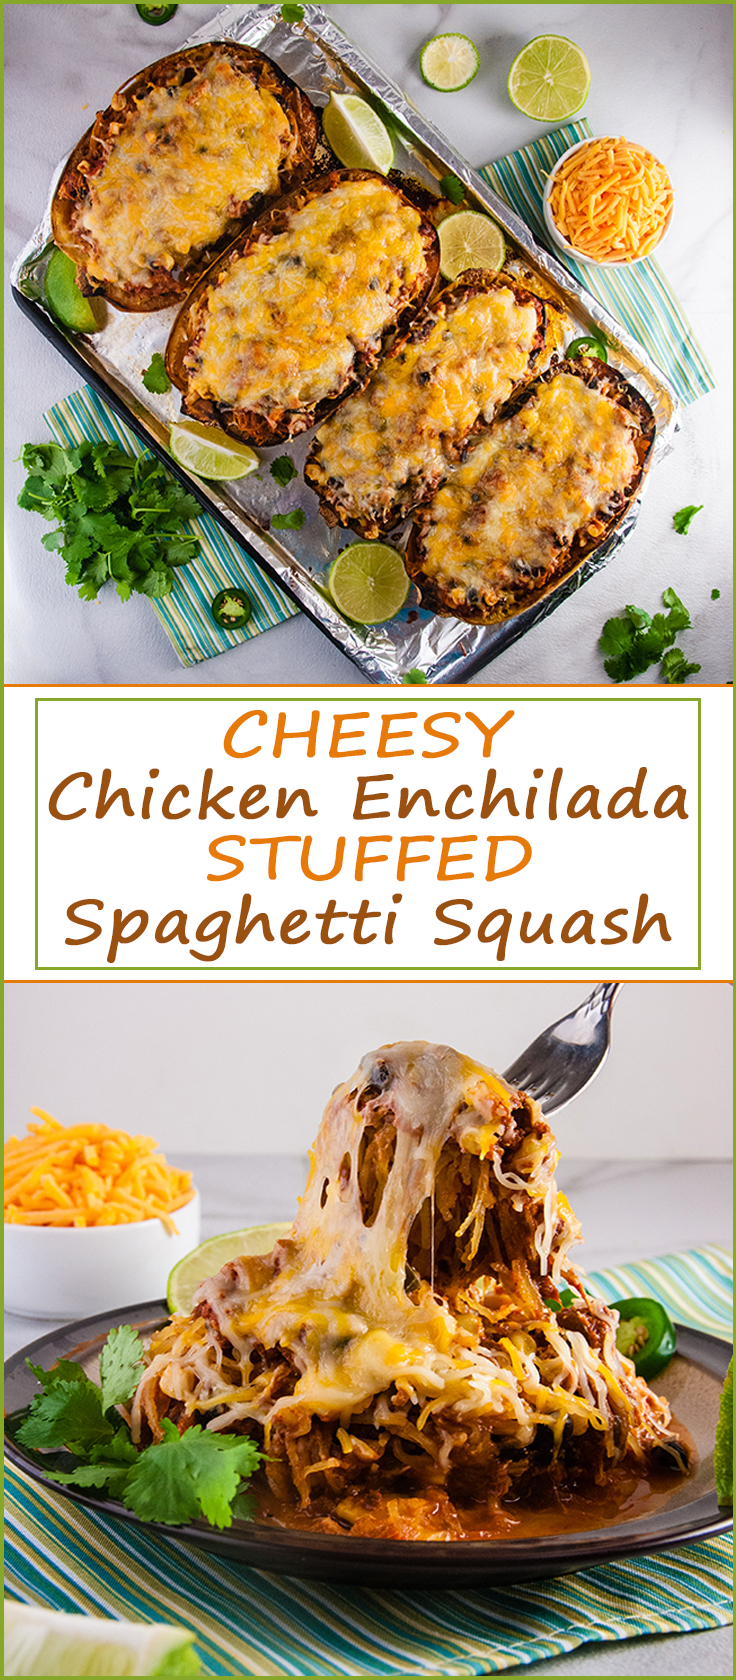 Cheesy Chicken Enchilada Stuffed Spaghetti Squash from www.SeasonedSprinkles.com